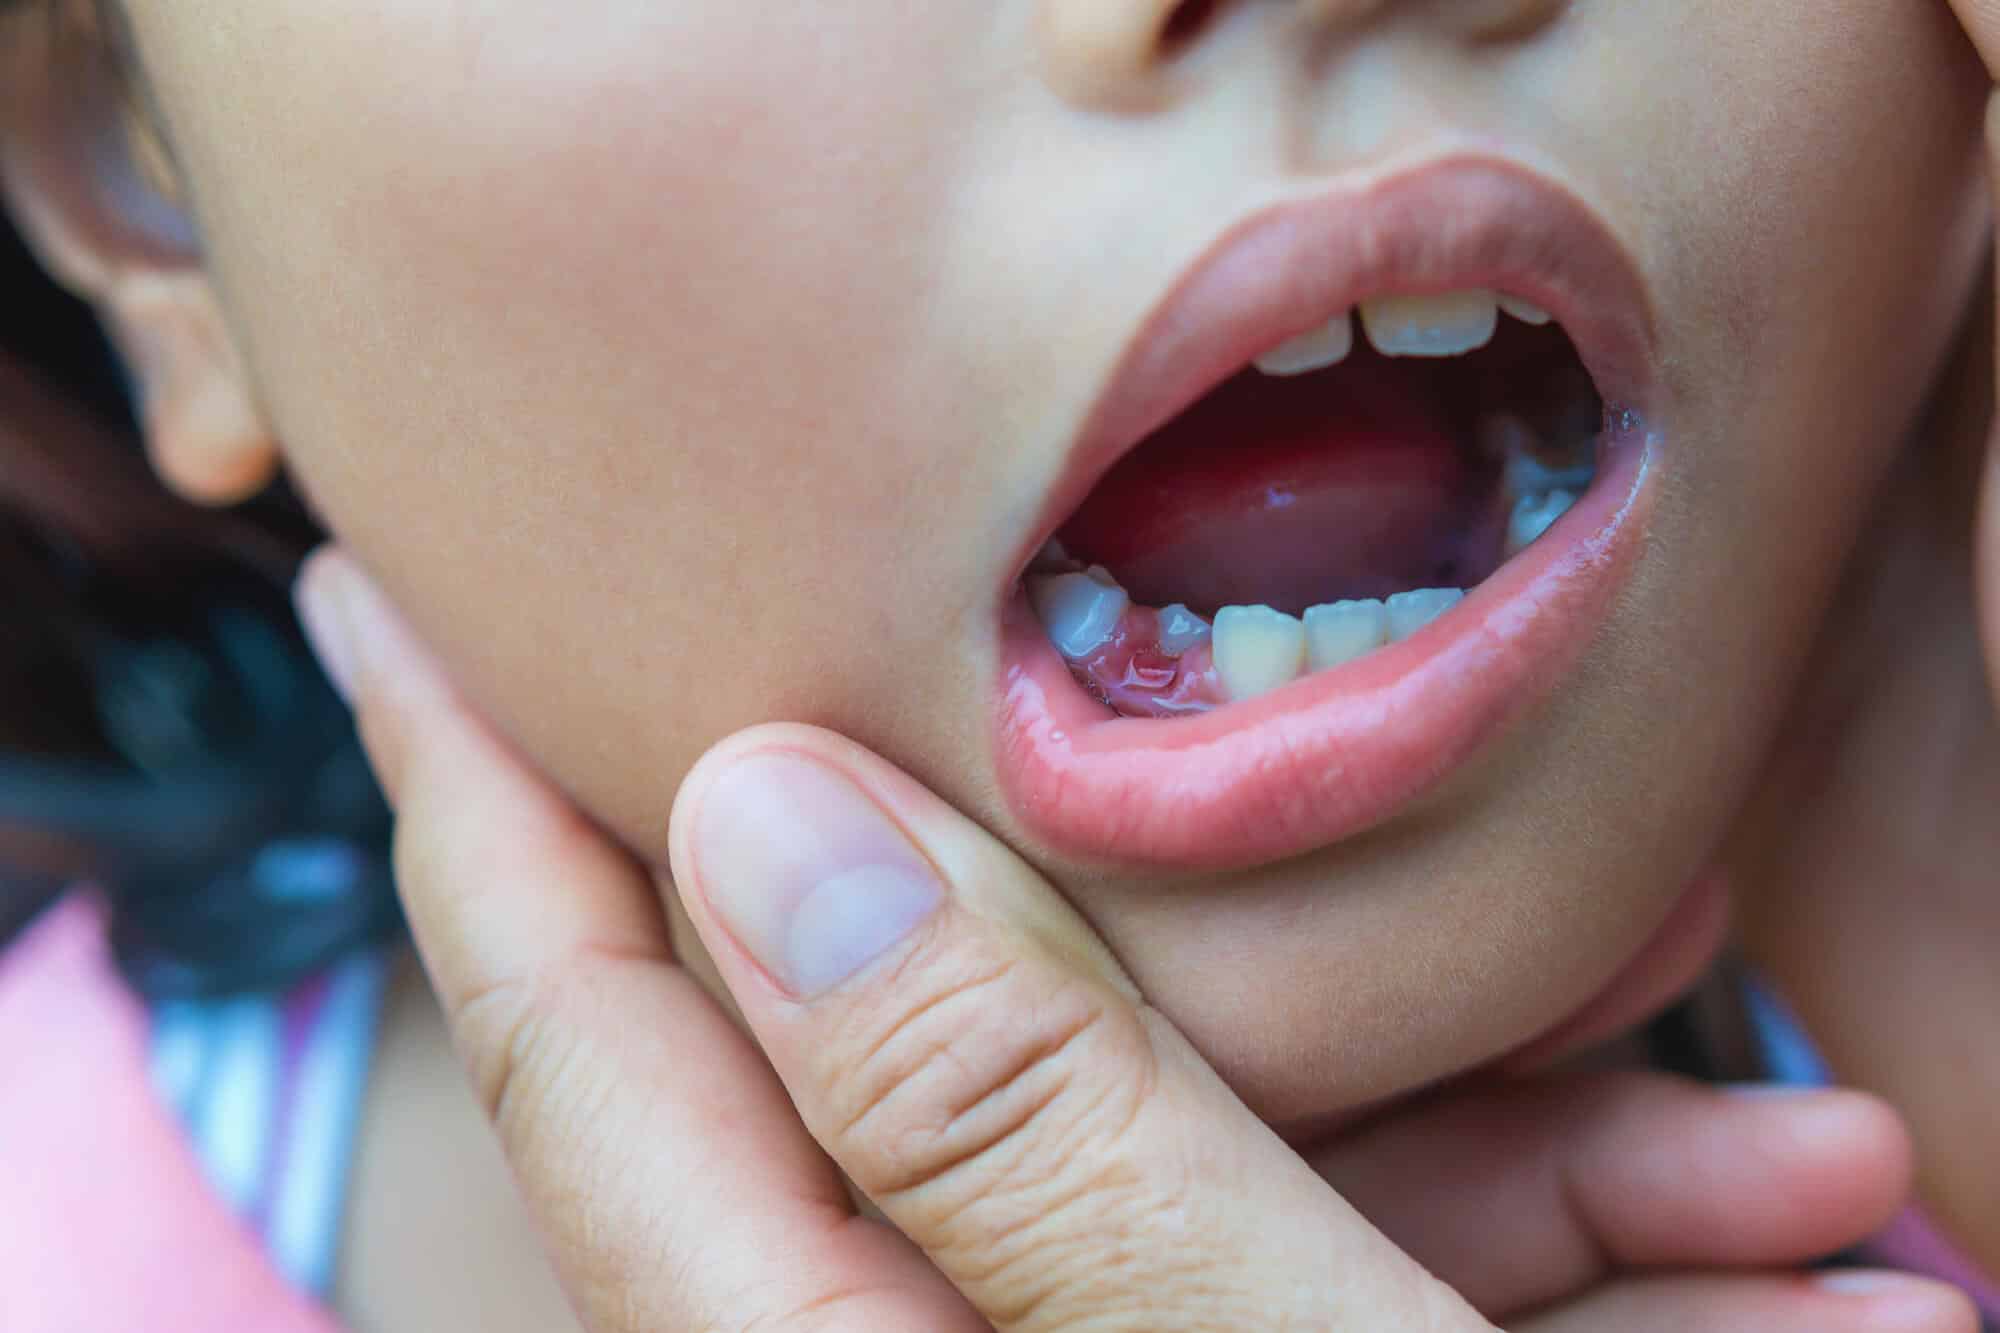 When Will My Baby Start Developing Teeth?